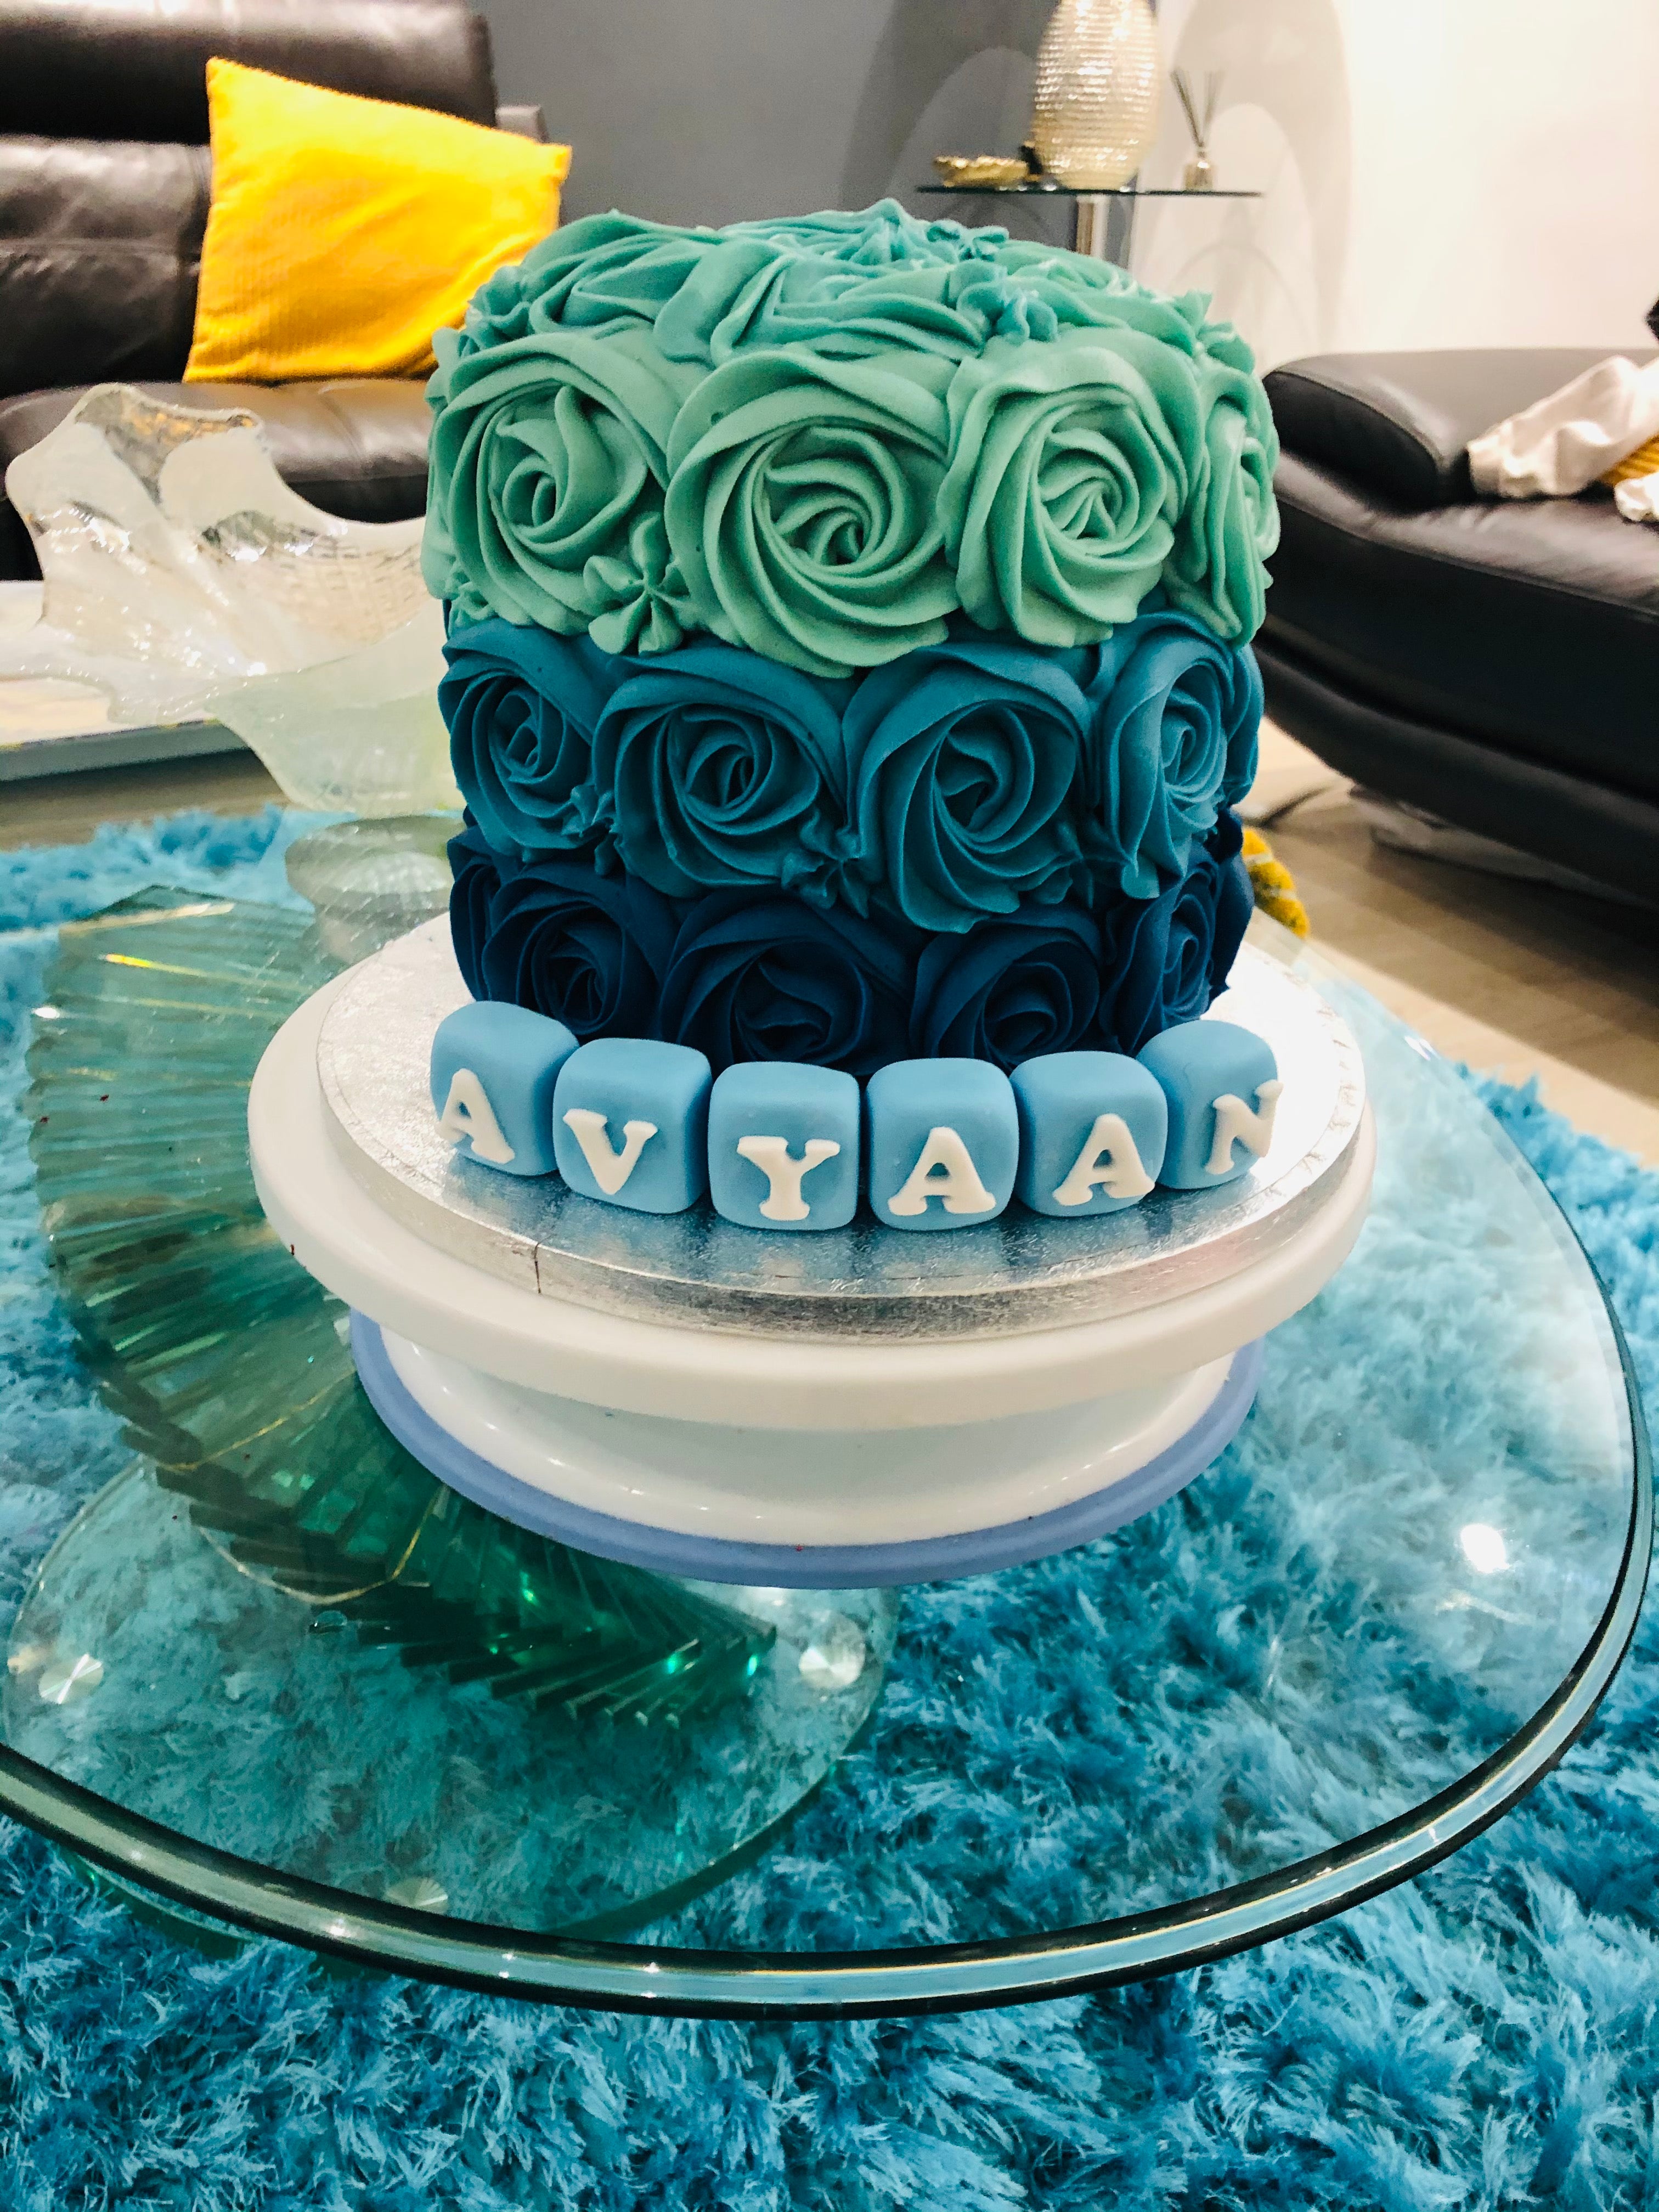 Tiffany blue rosette cake - Decorated Cake by Gen - CakesDecor